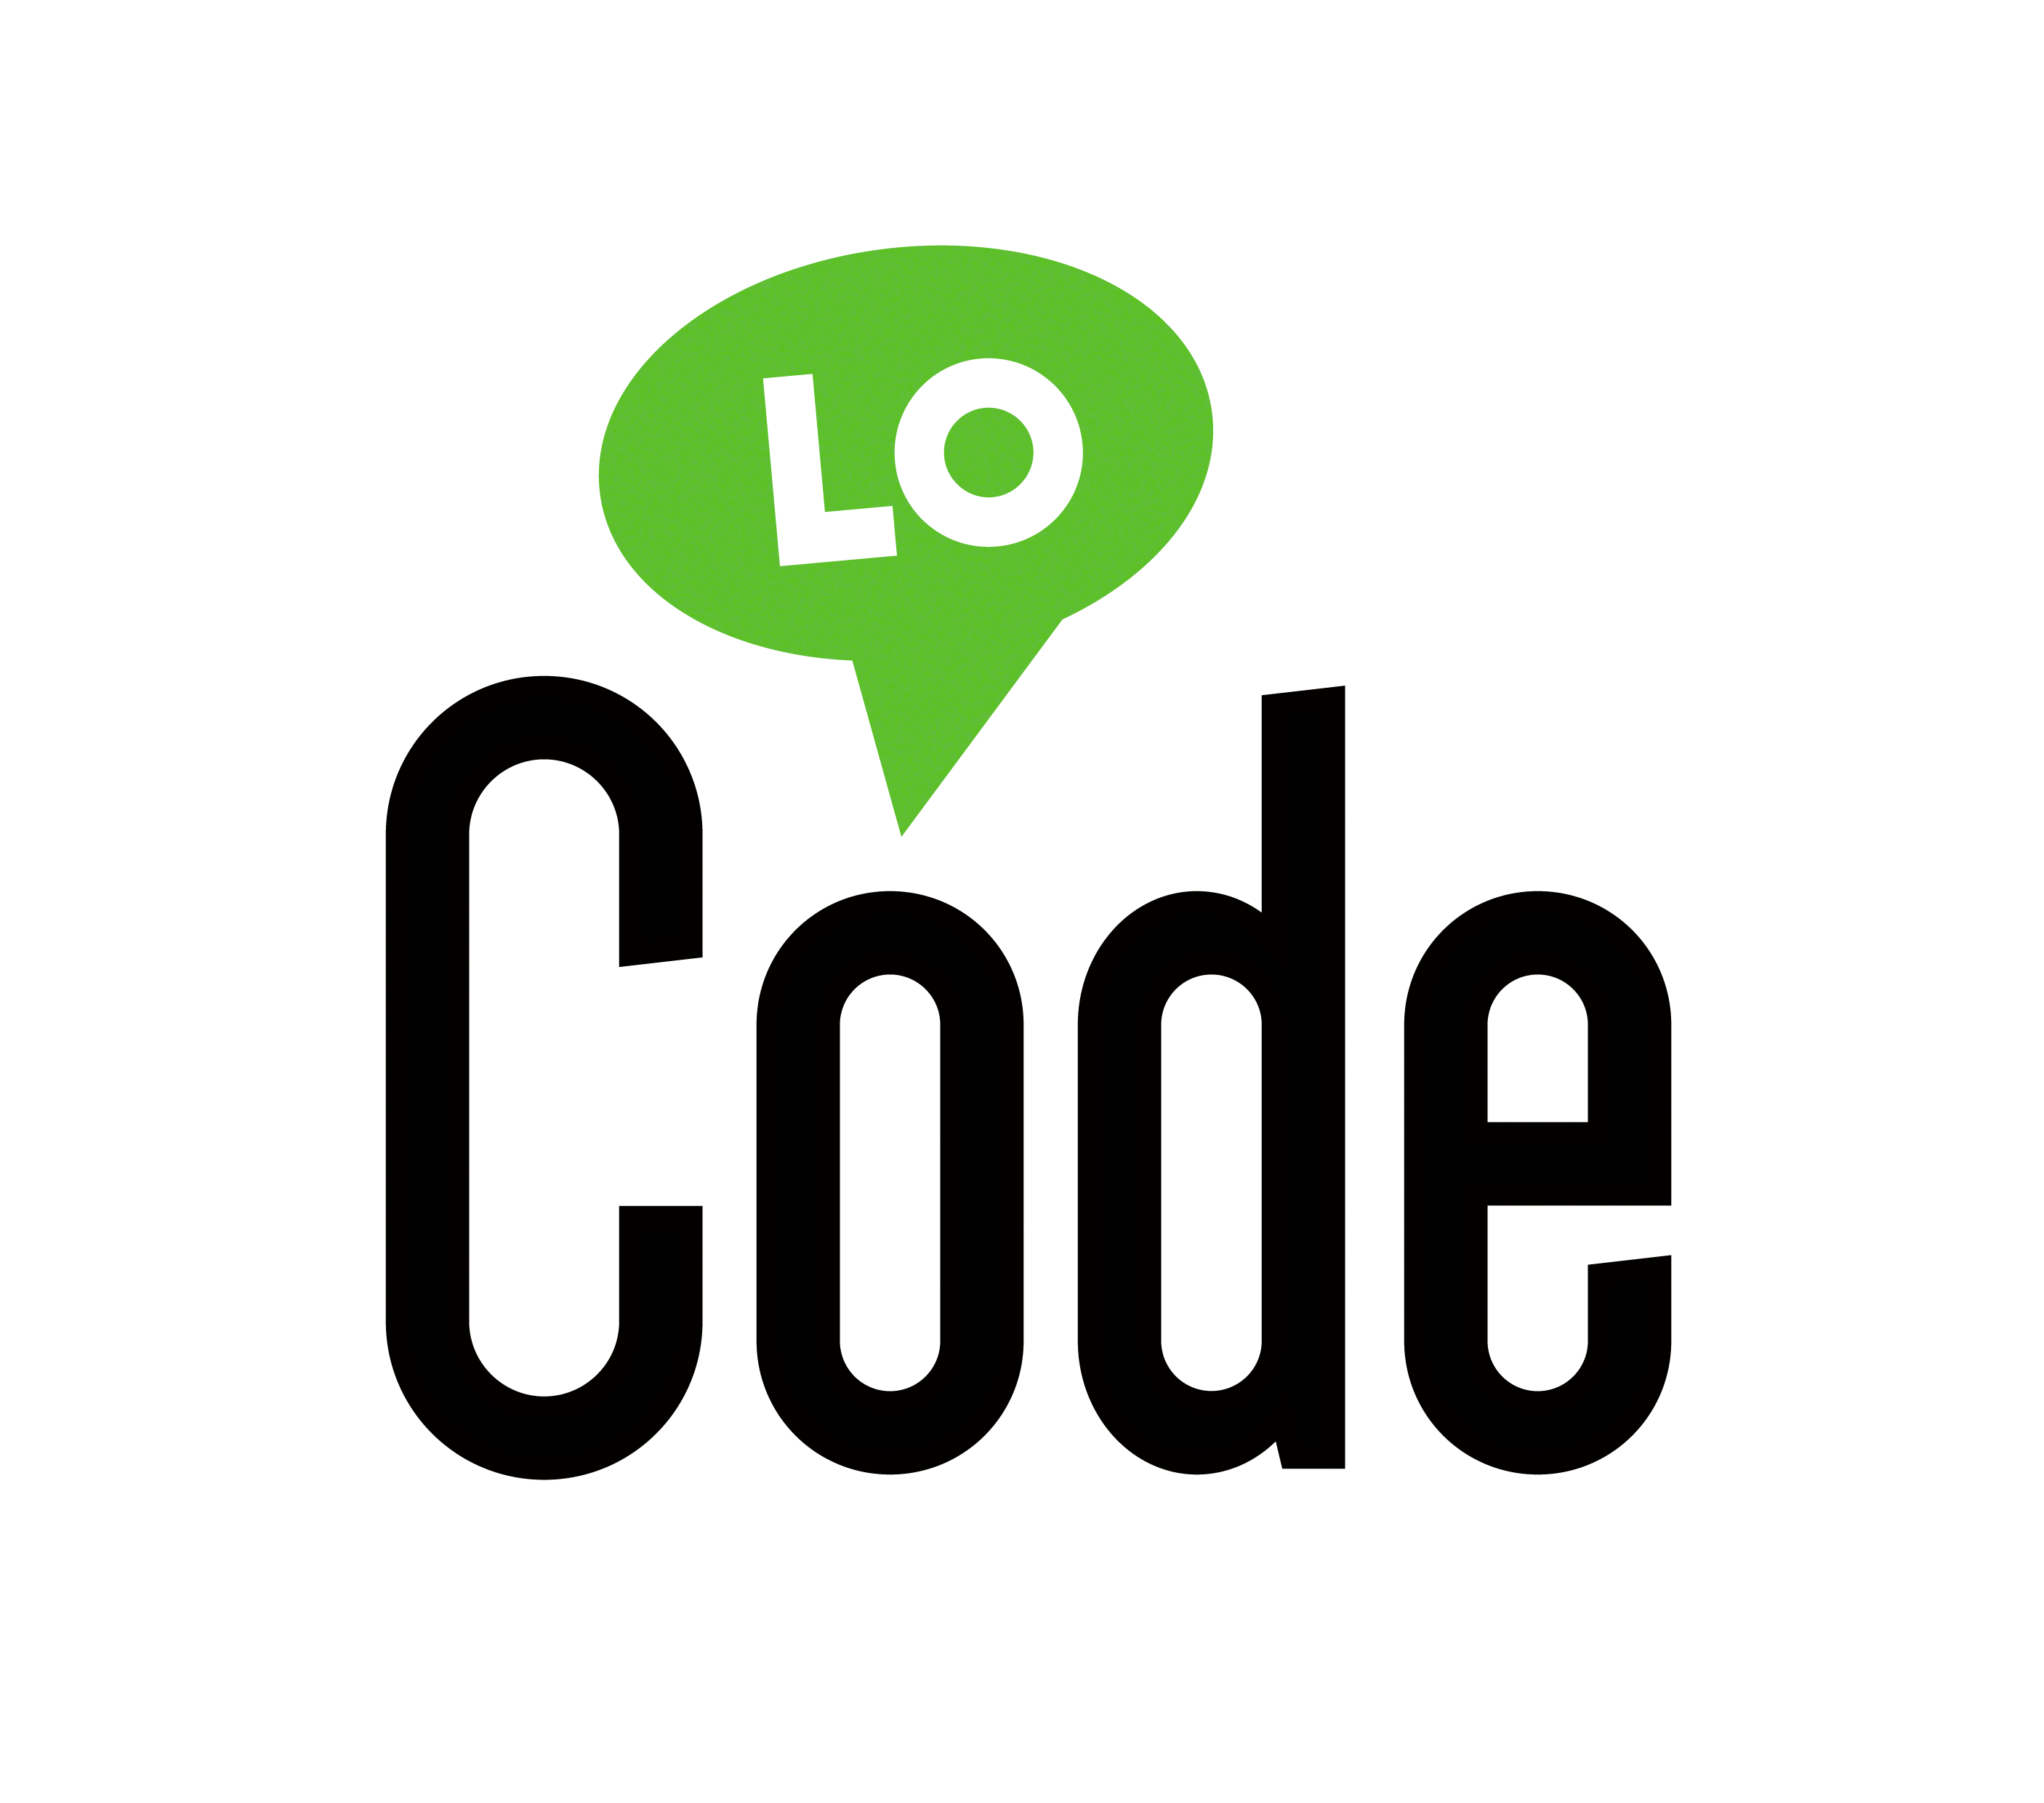 LoCode marketing and alternative logo designs